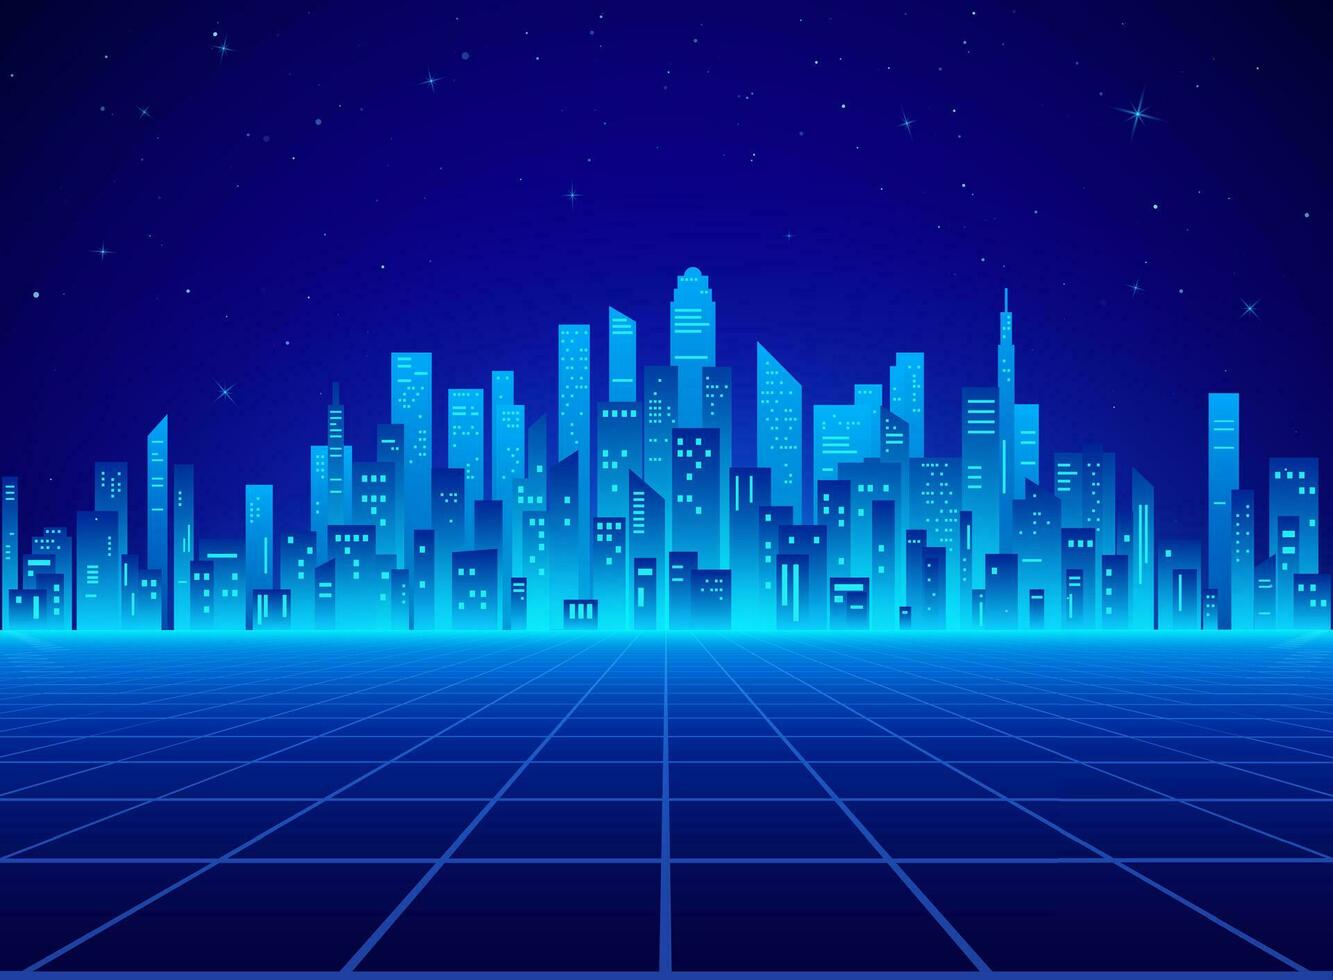 neon retro stad landschap in blauw kleuren. cyberpunk futuristische dorp. sci-fi achtergrond abstract digitaal architectuur. vector illustratie